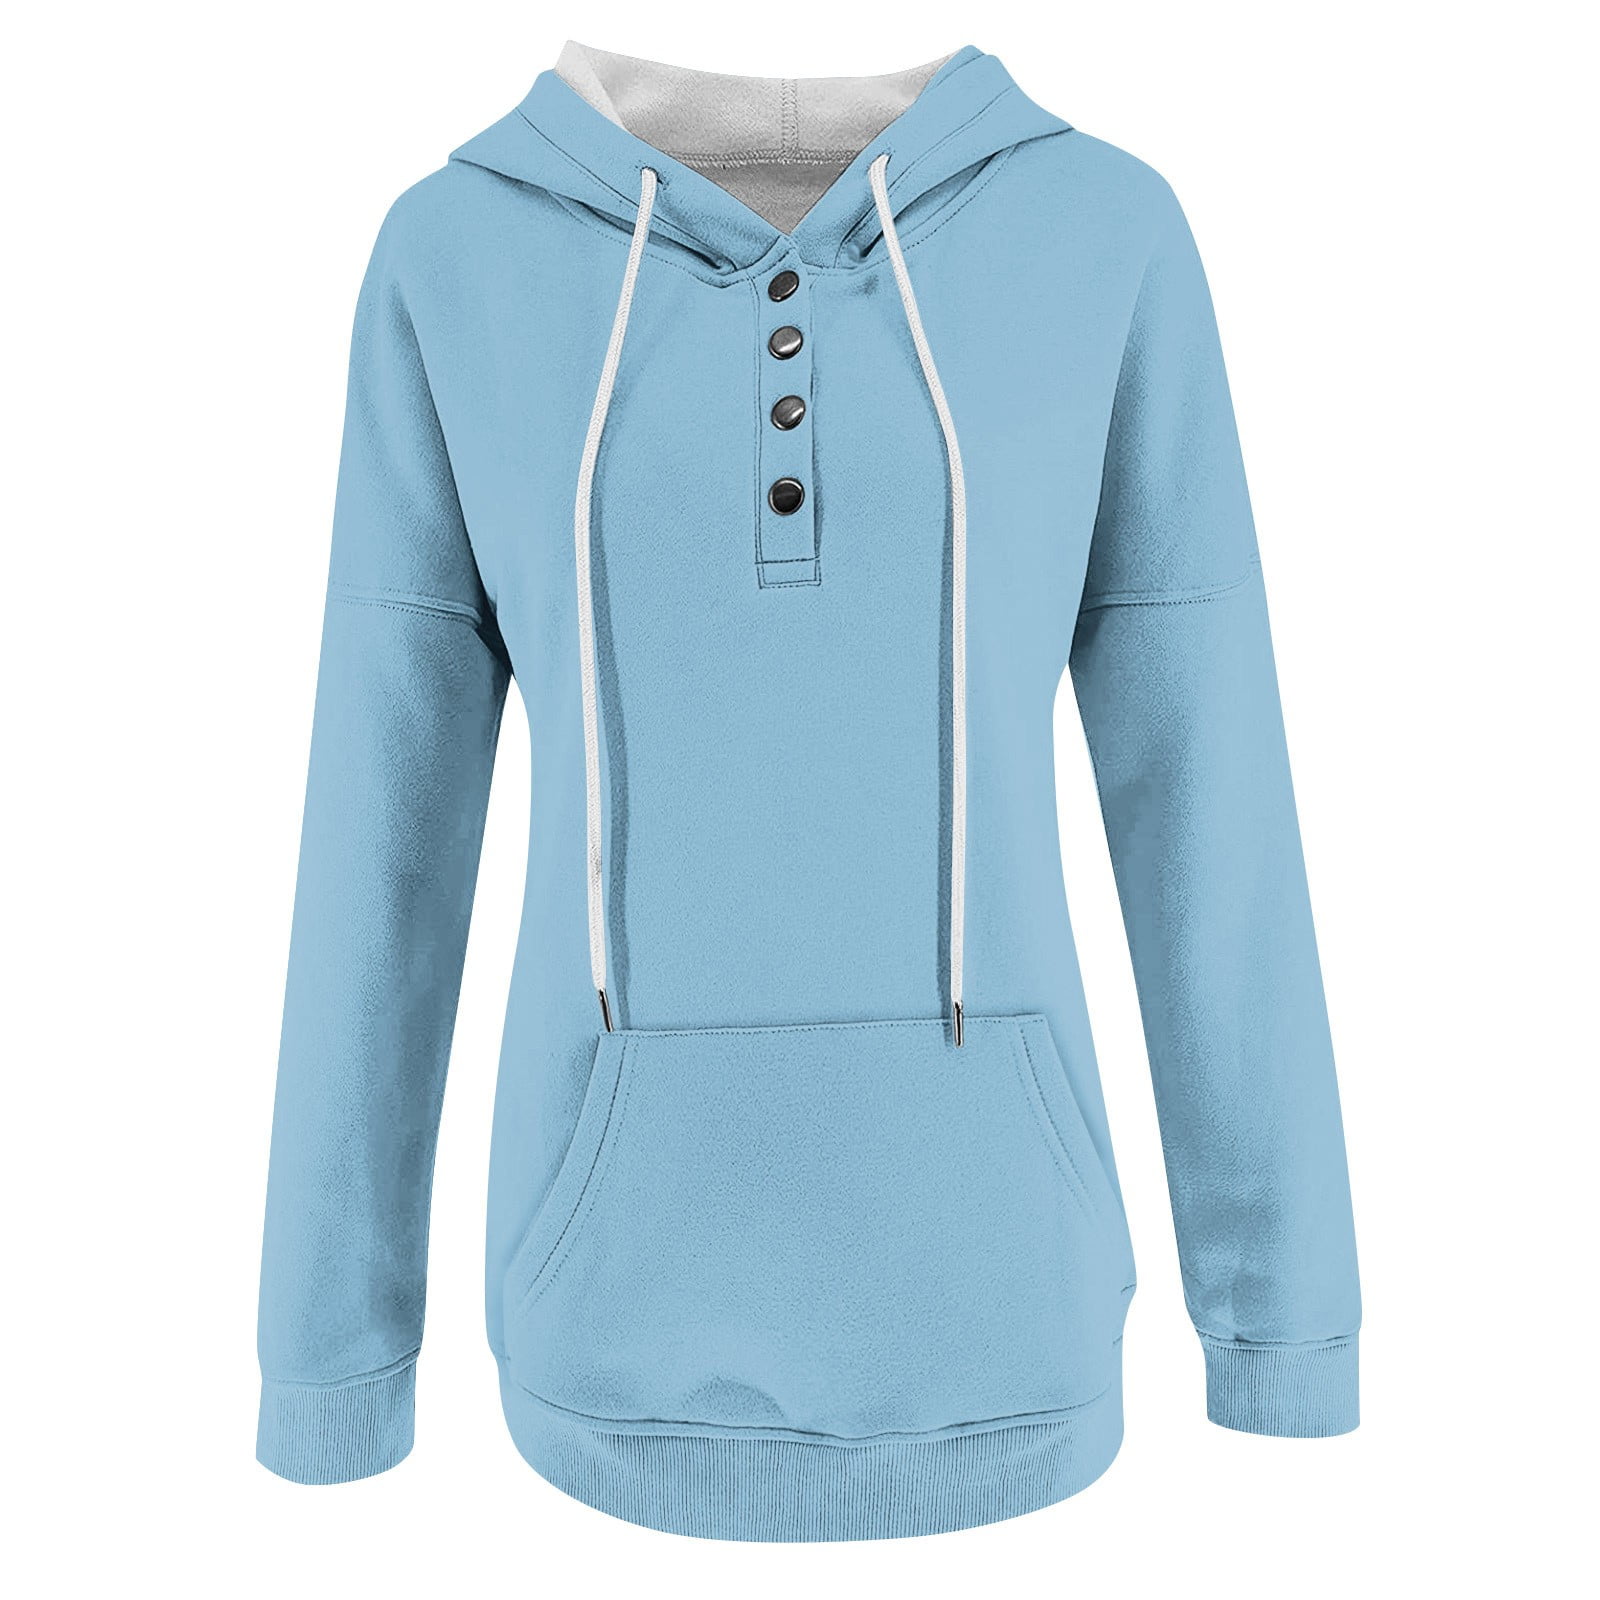 Cuoff Hoodie Sweatshirt for Women Women's Casual Fashion Solid Color Long  Sleeve Pullover Hoodies Sweatshirts Light Blue 2X